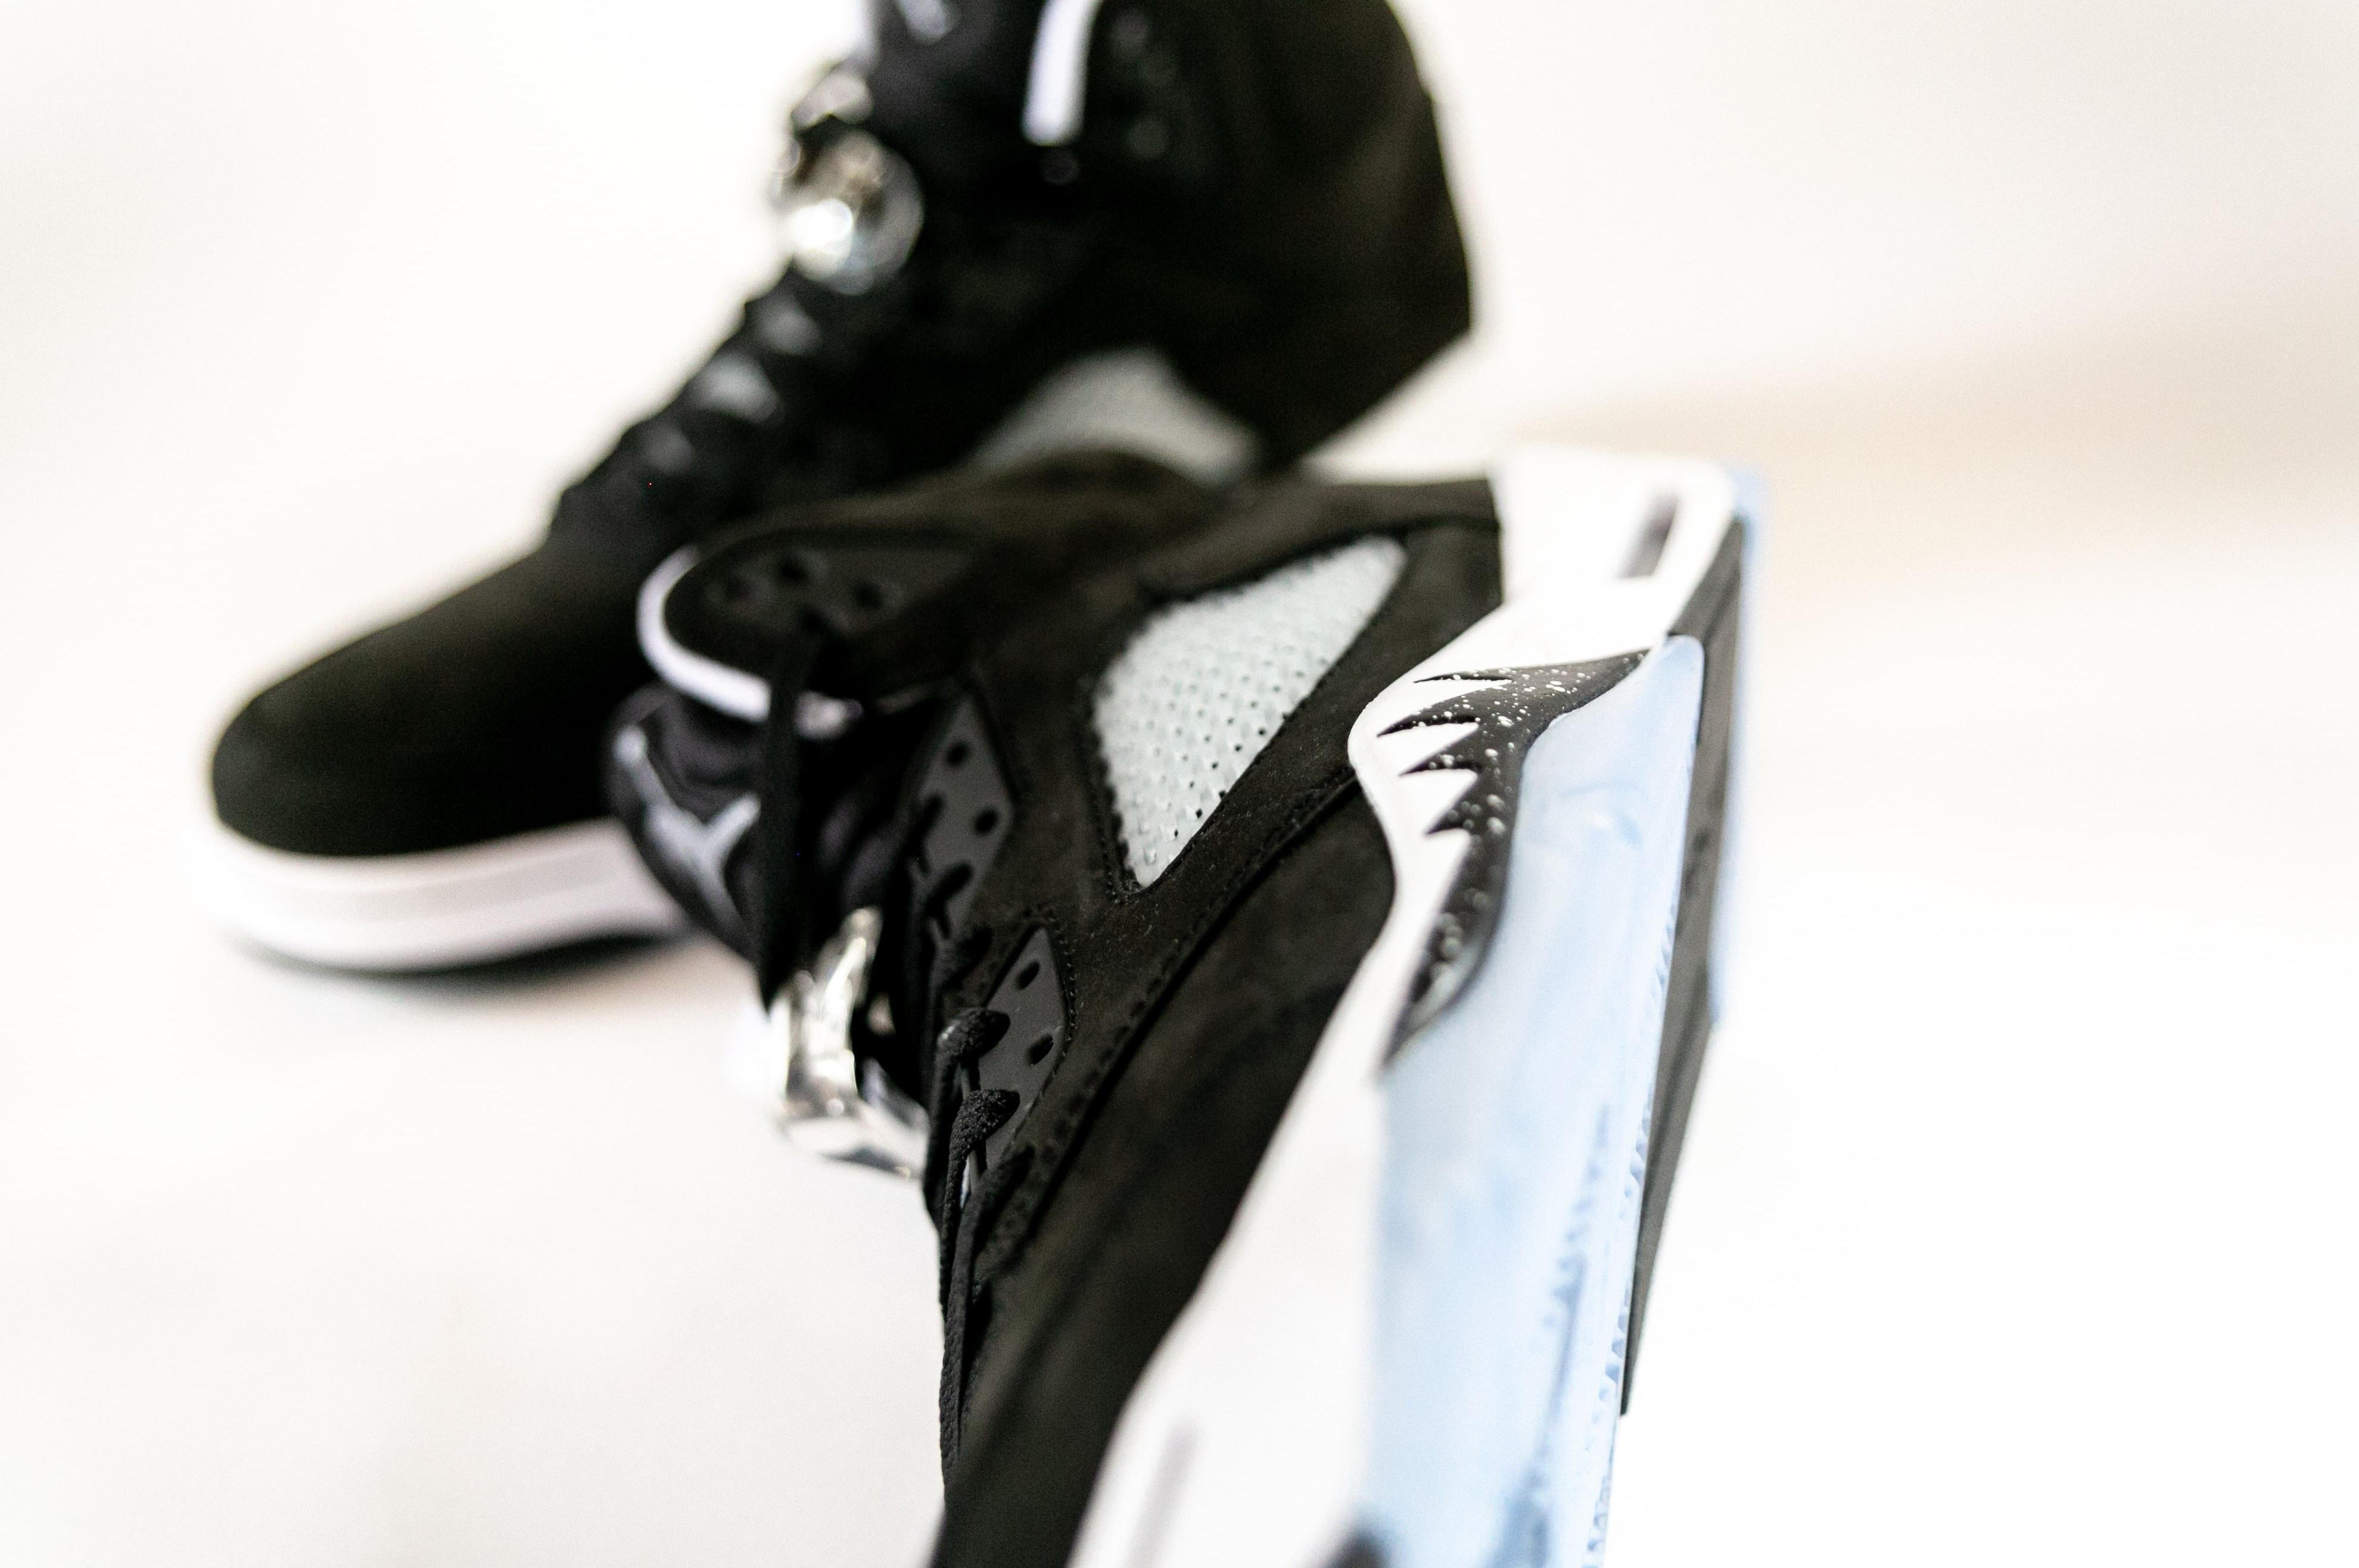 Sneakers Release – Jordan 5 Retro “Moonlight” Black/Cool Grey 